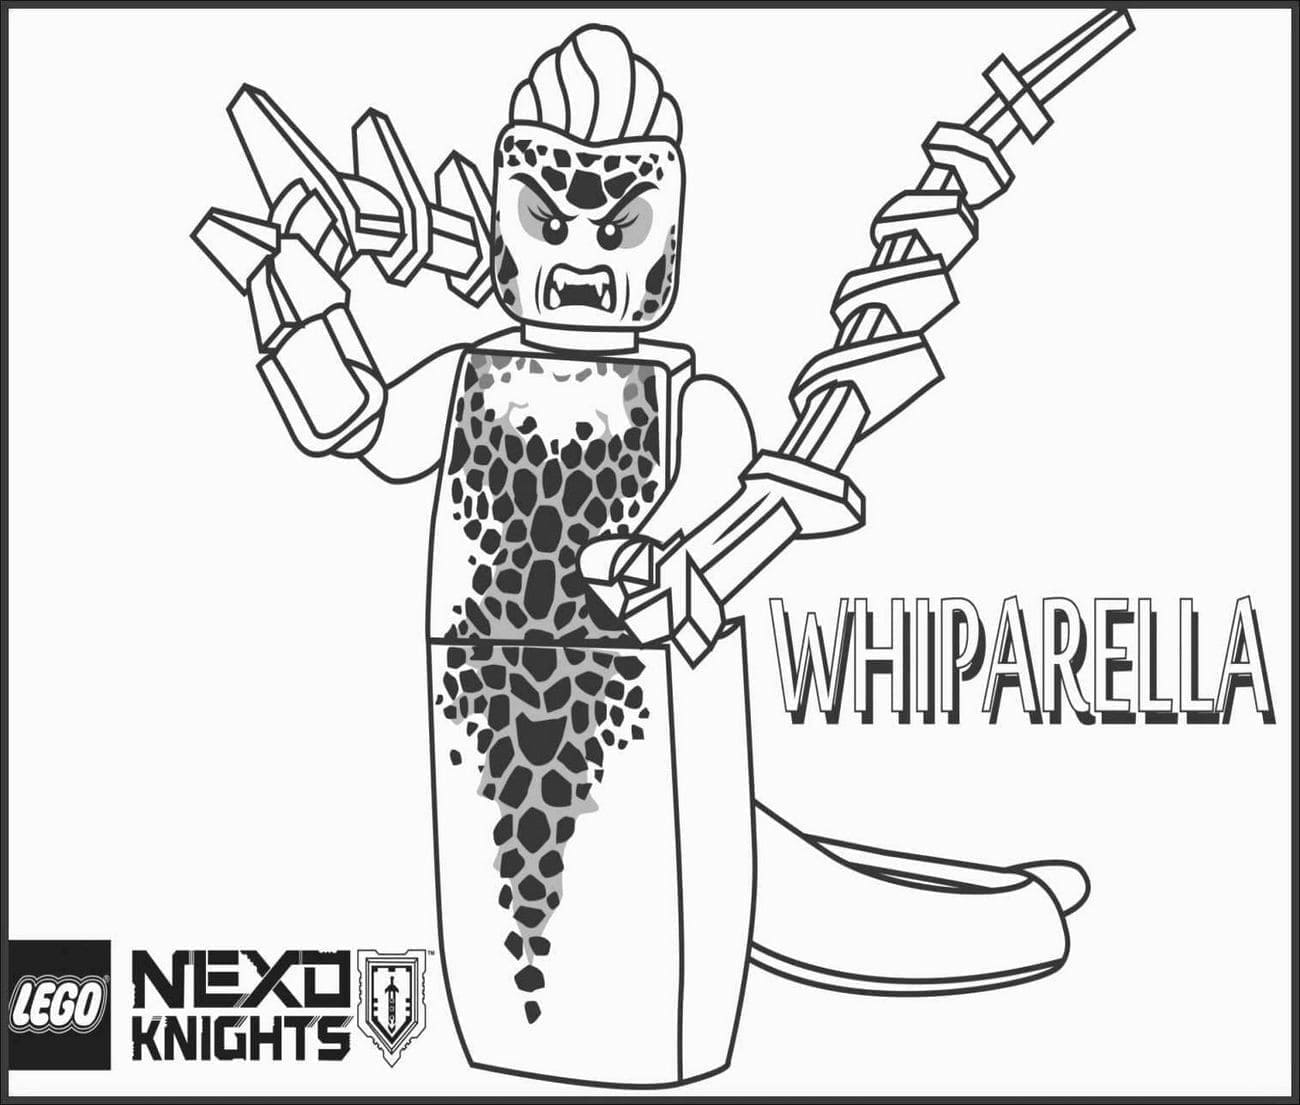 Lego Nexo Knights Whiparella coloring page